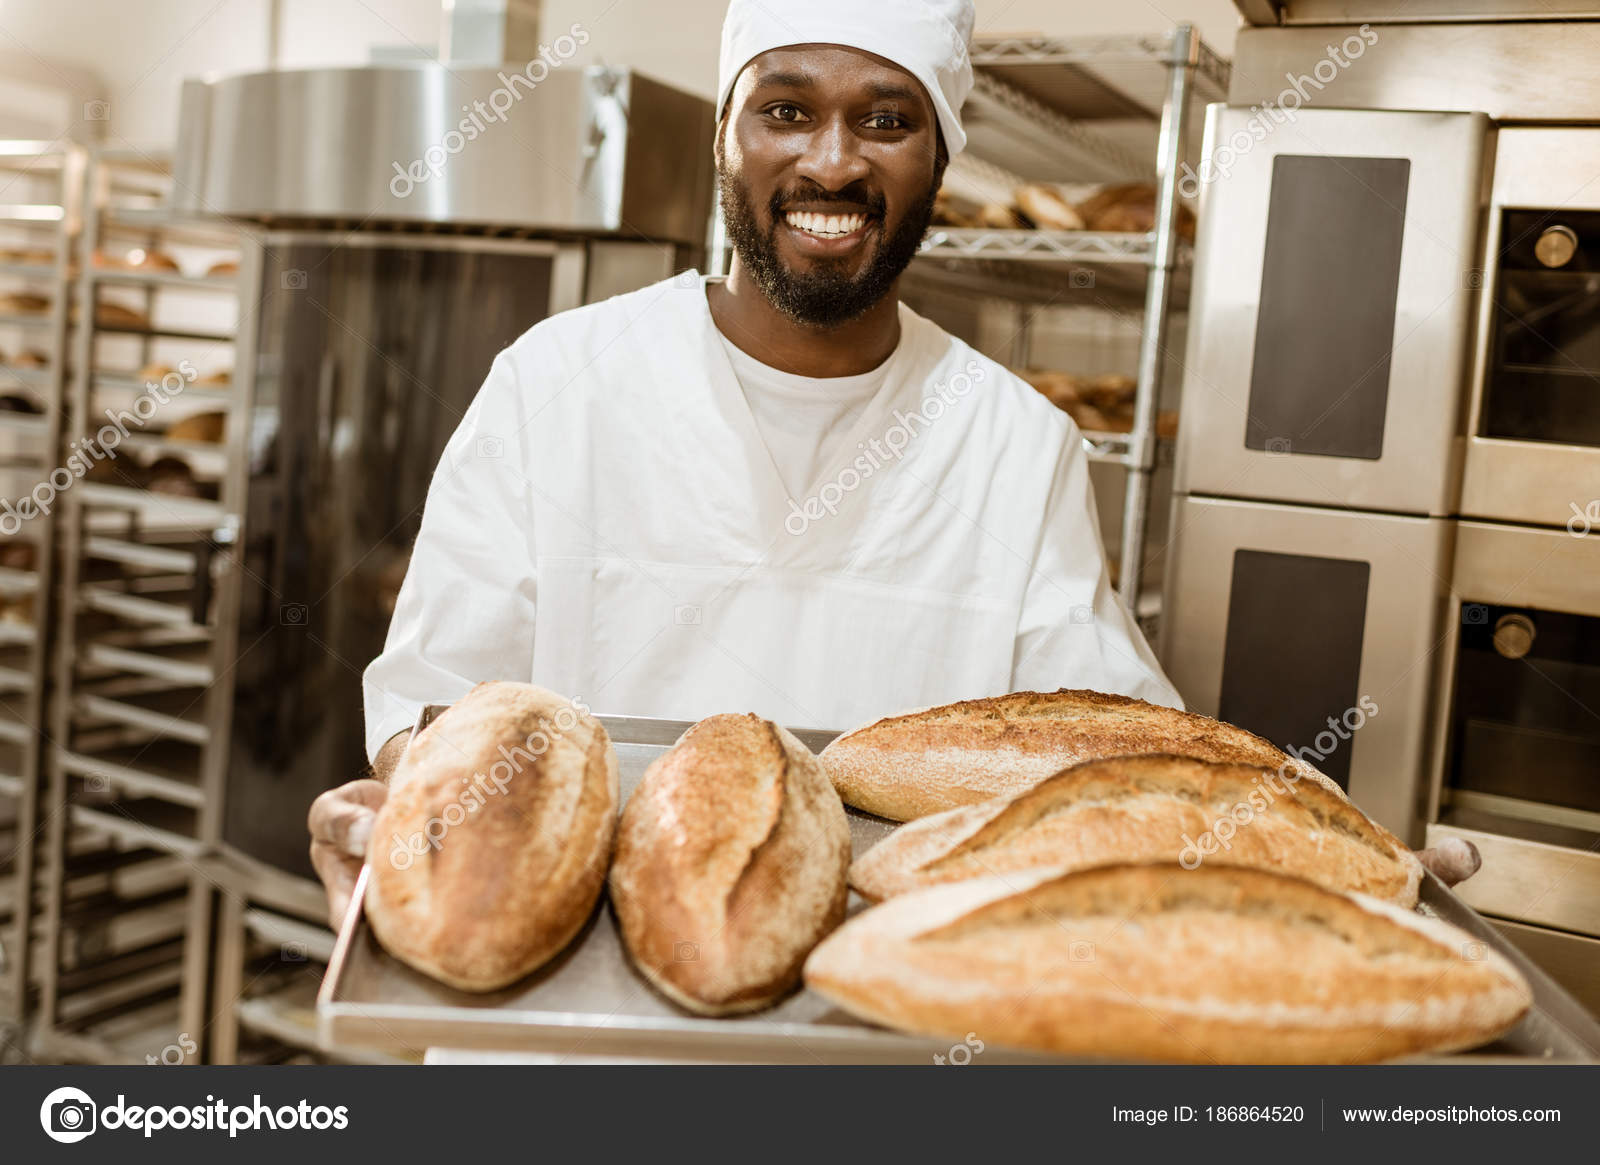 https://st3.depositphotos.com/9880800/18686/i/1600/depositphotos_186864520-stock-photo-handsome-african-american-baker-tray.jpg